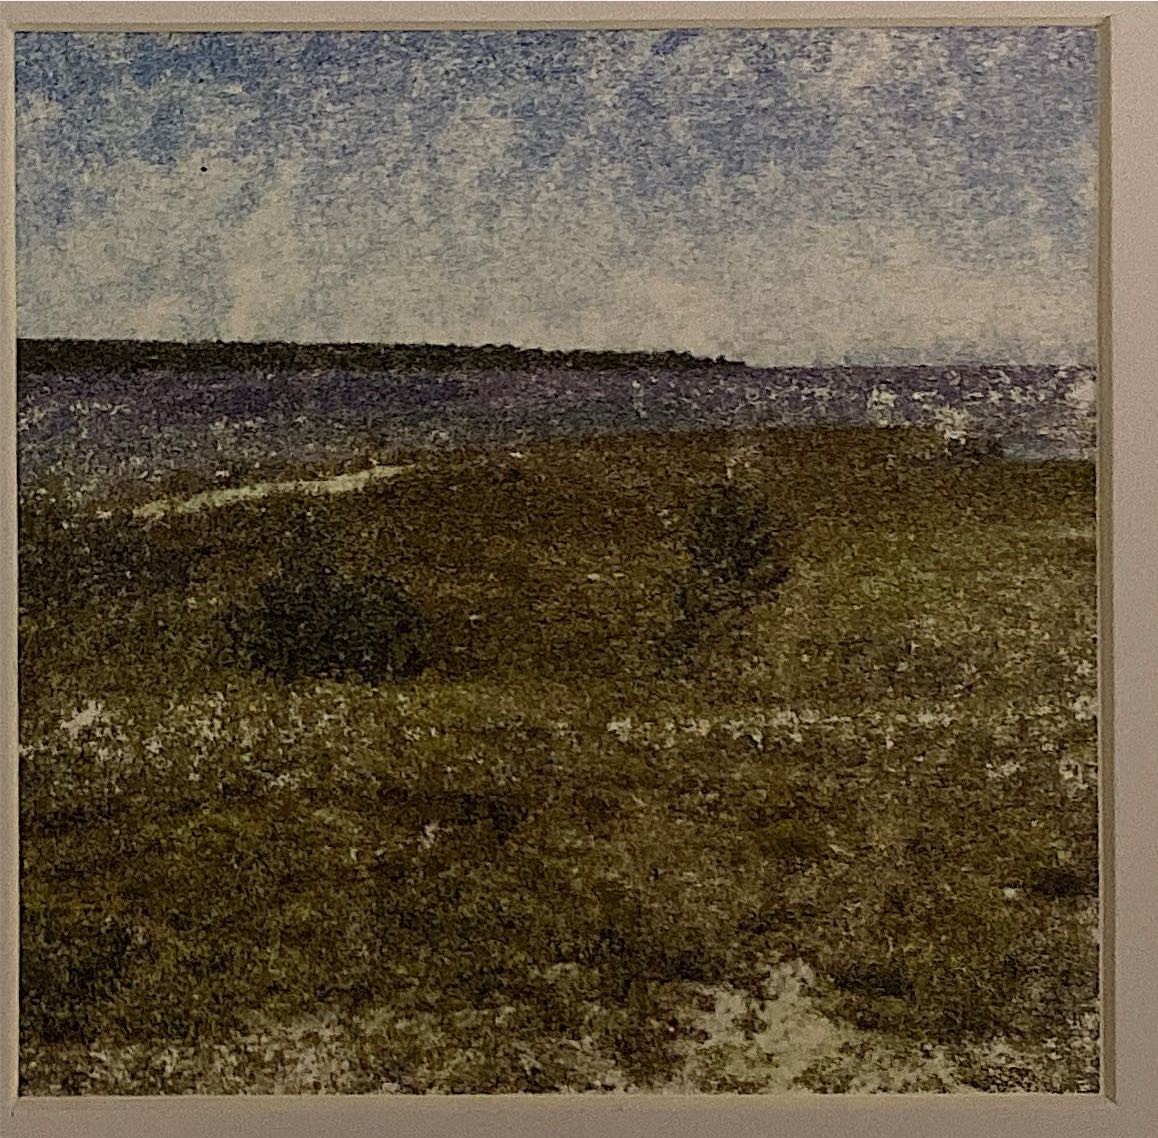 A painting of Lake Michigan